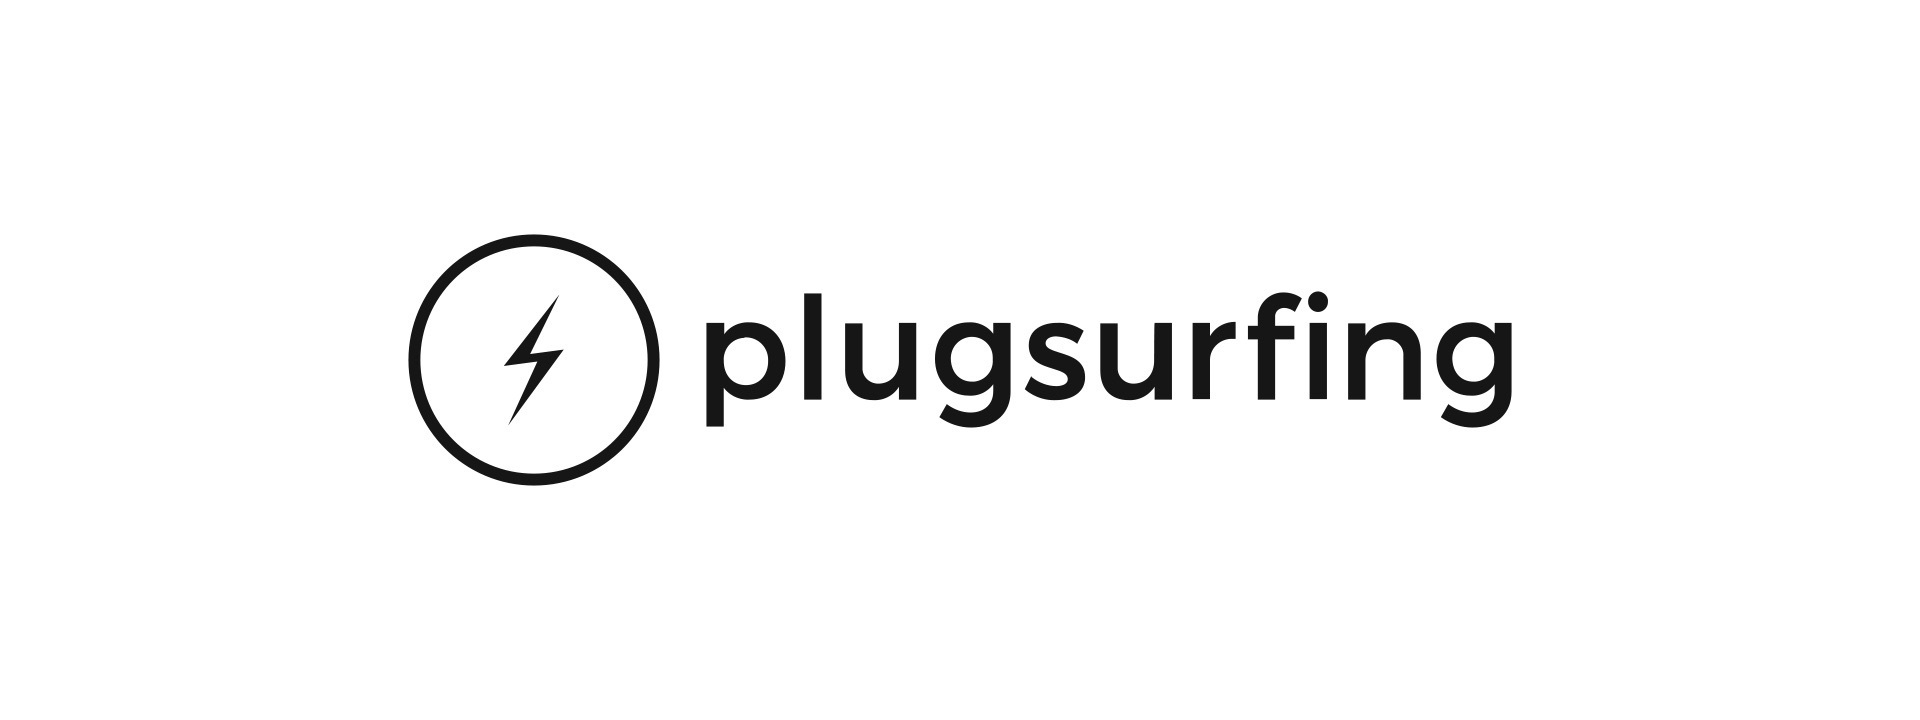 logo plugsurfing mistergreen